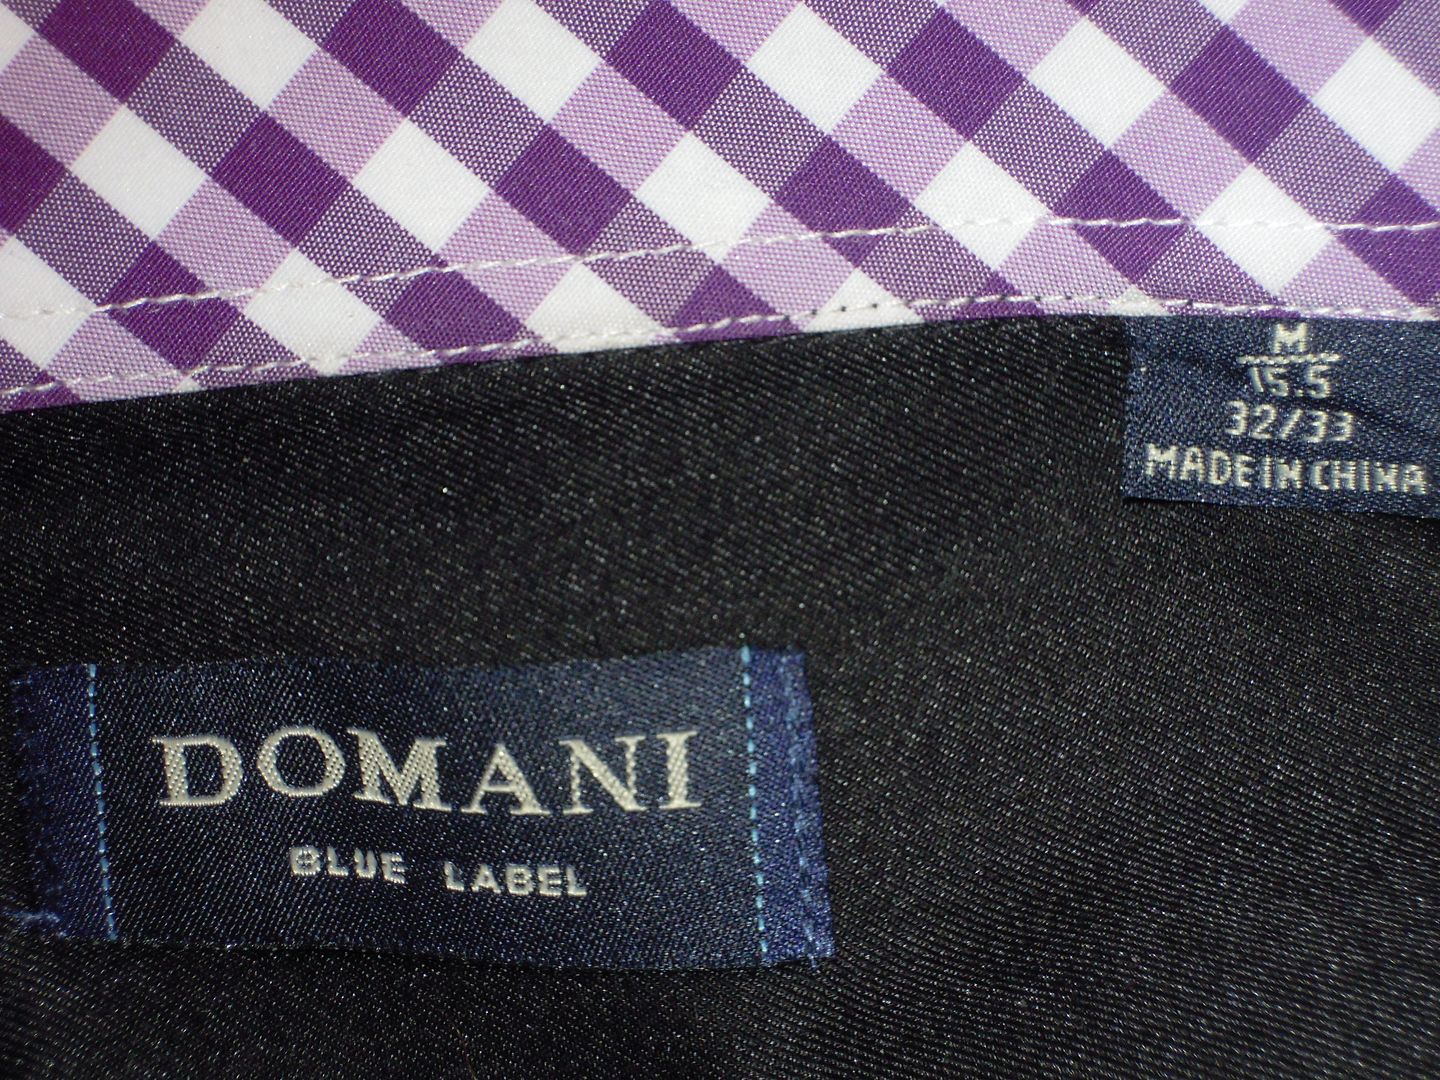 Domani Blue Label Black Purple Check L Sleeve Flip Cuff Rock Music Club Shirt M